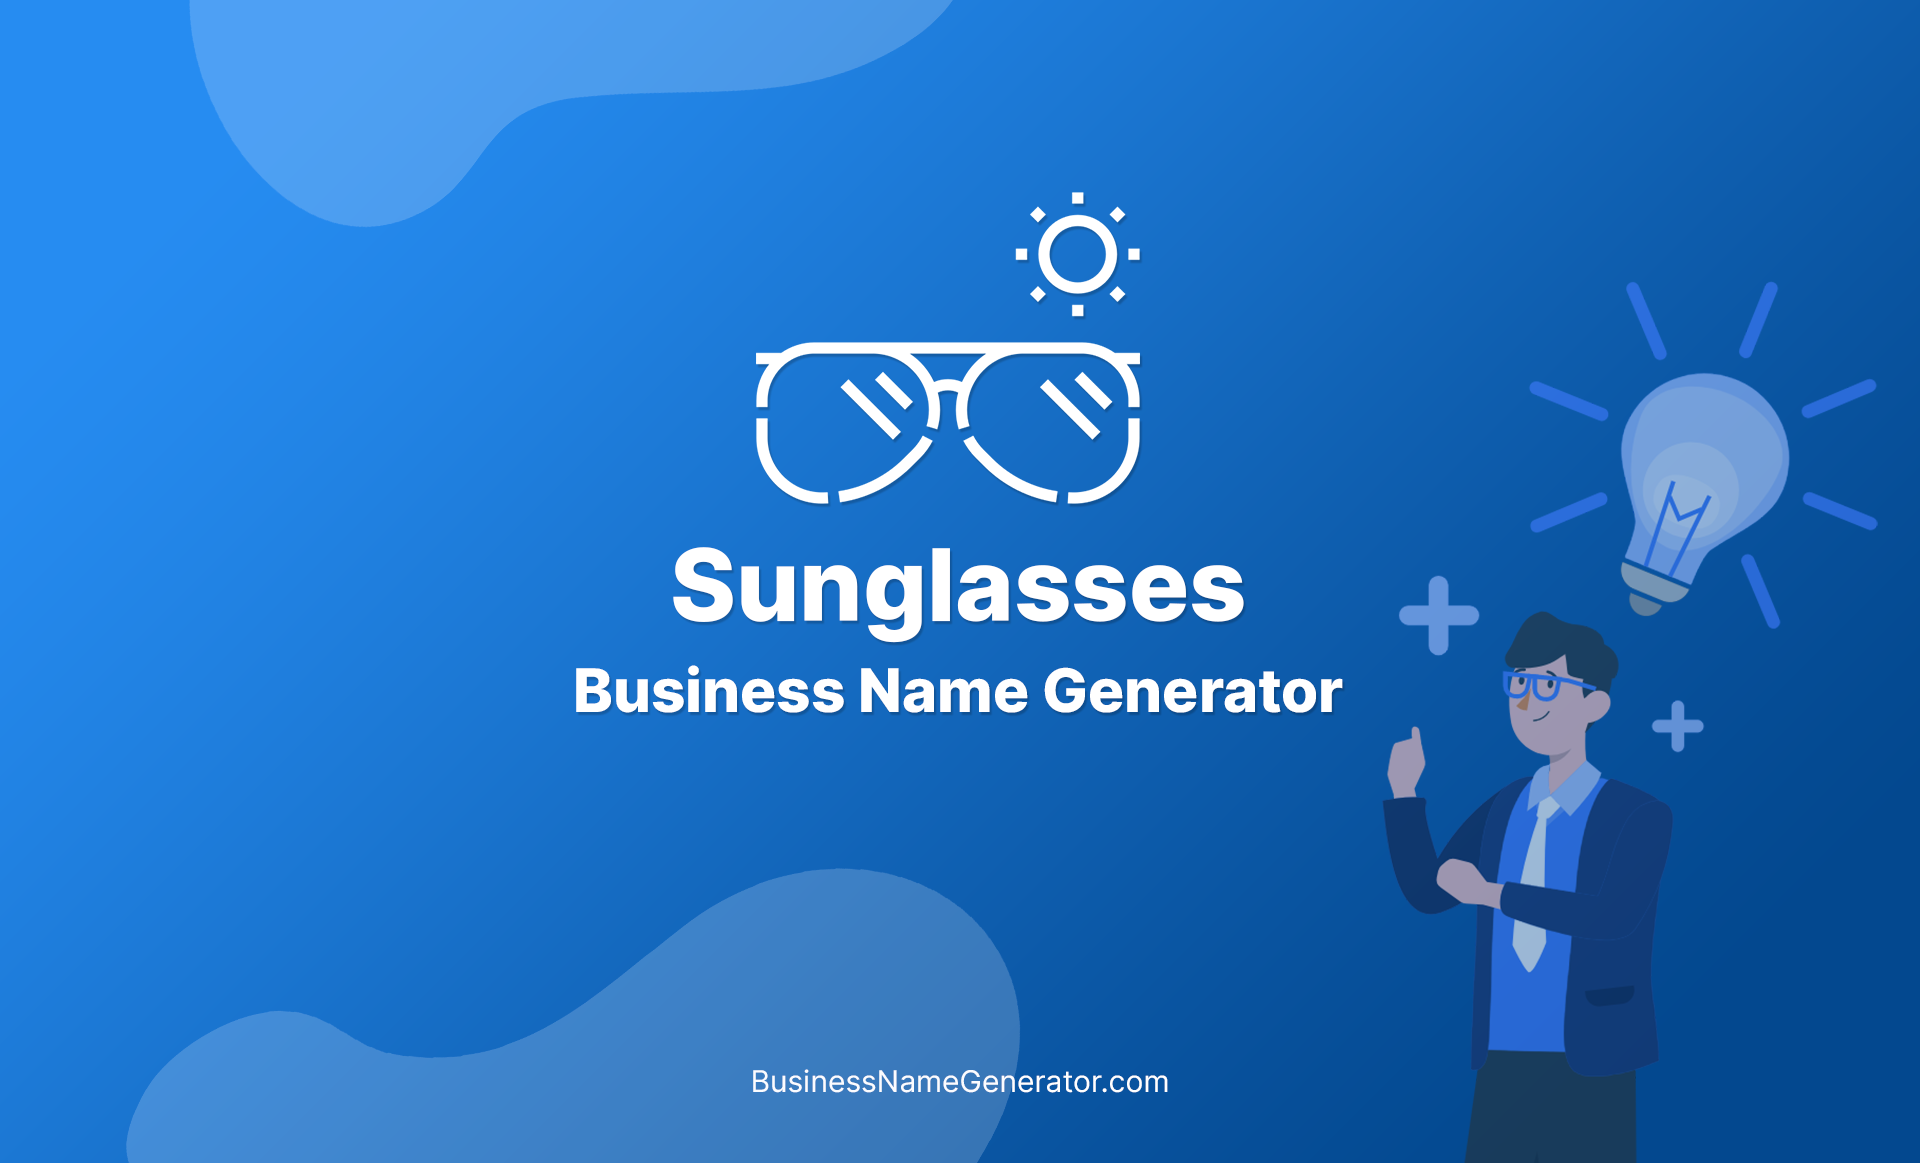 Sunglasses Business Name Generator